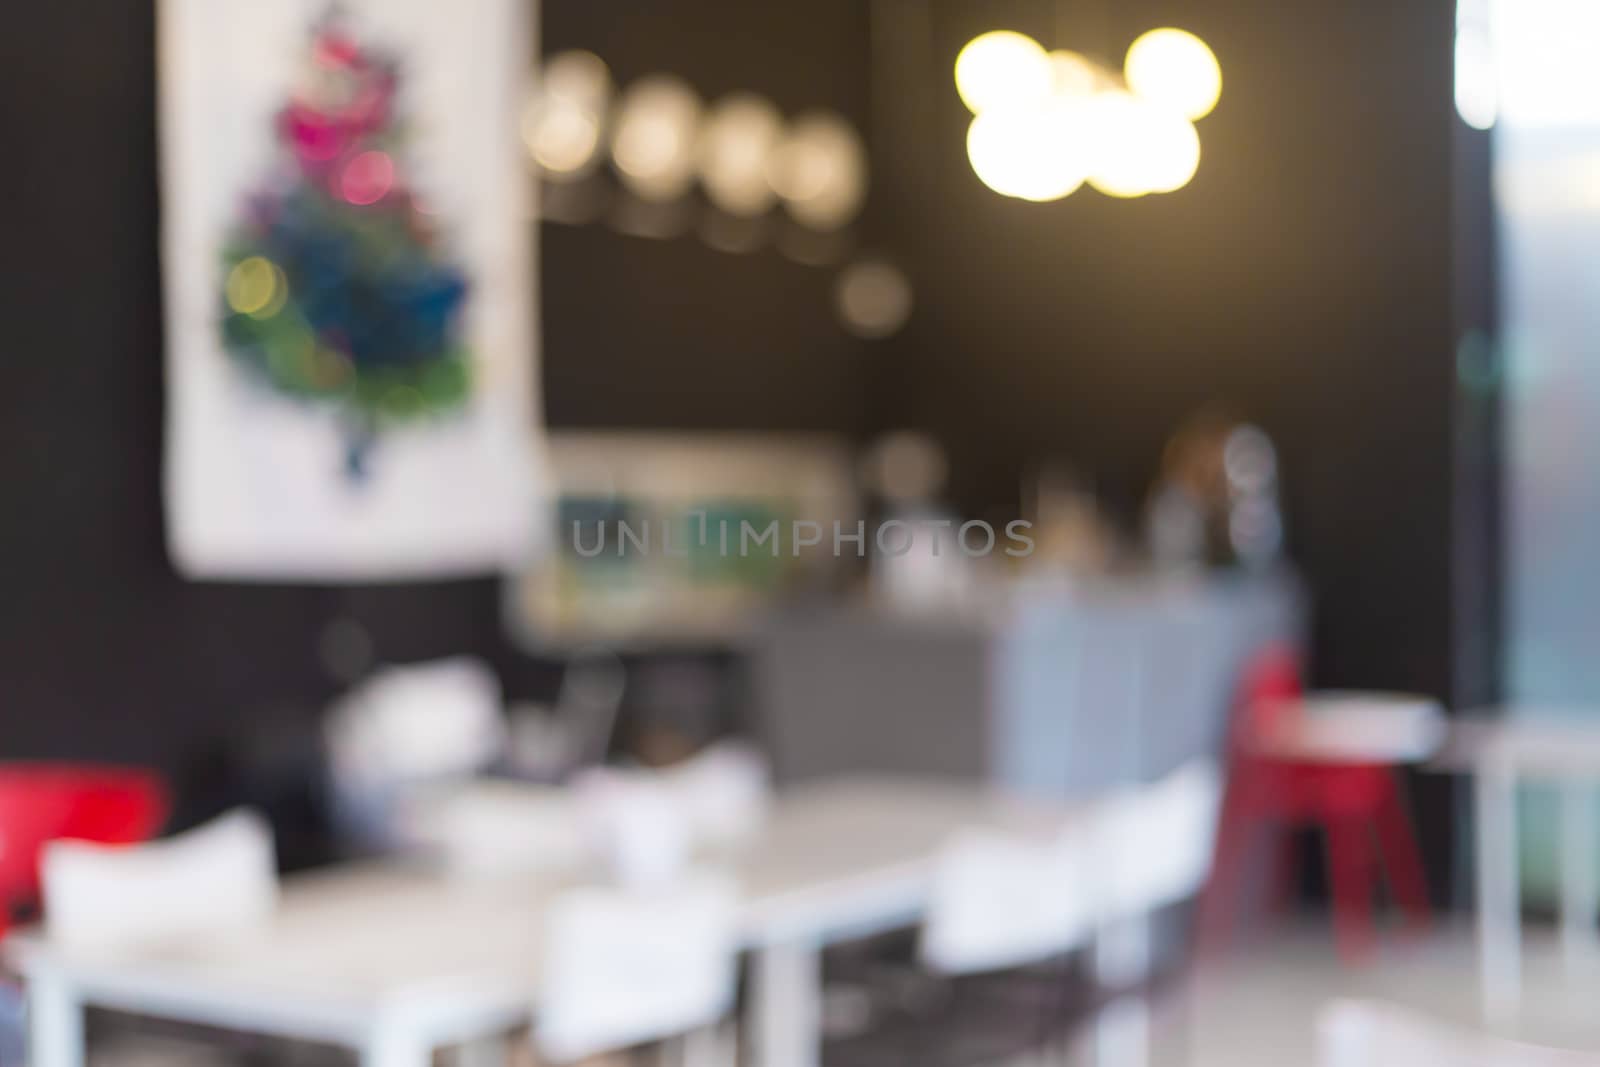 Restaurant Blurred background by papound